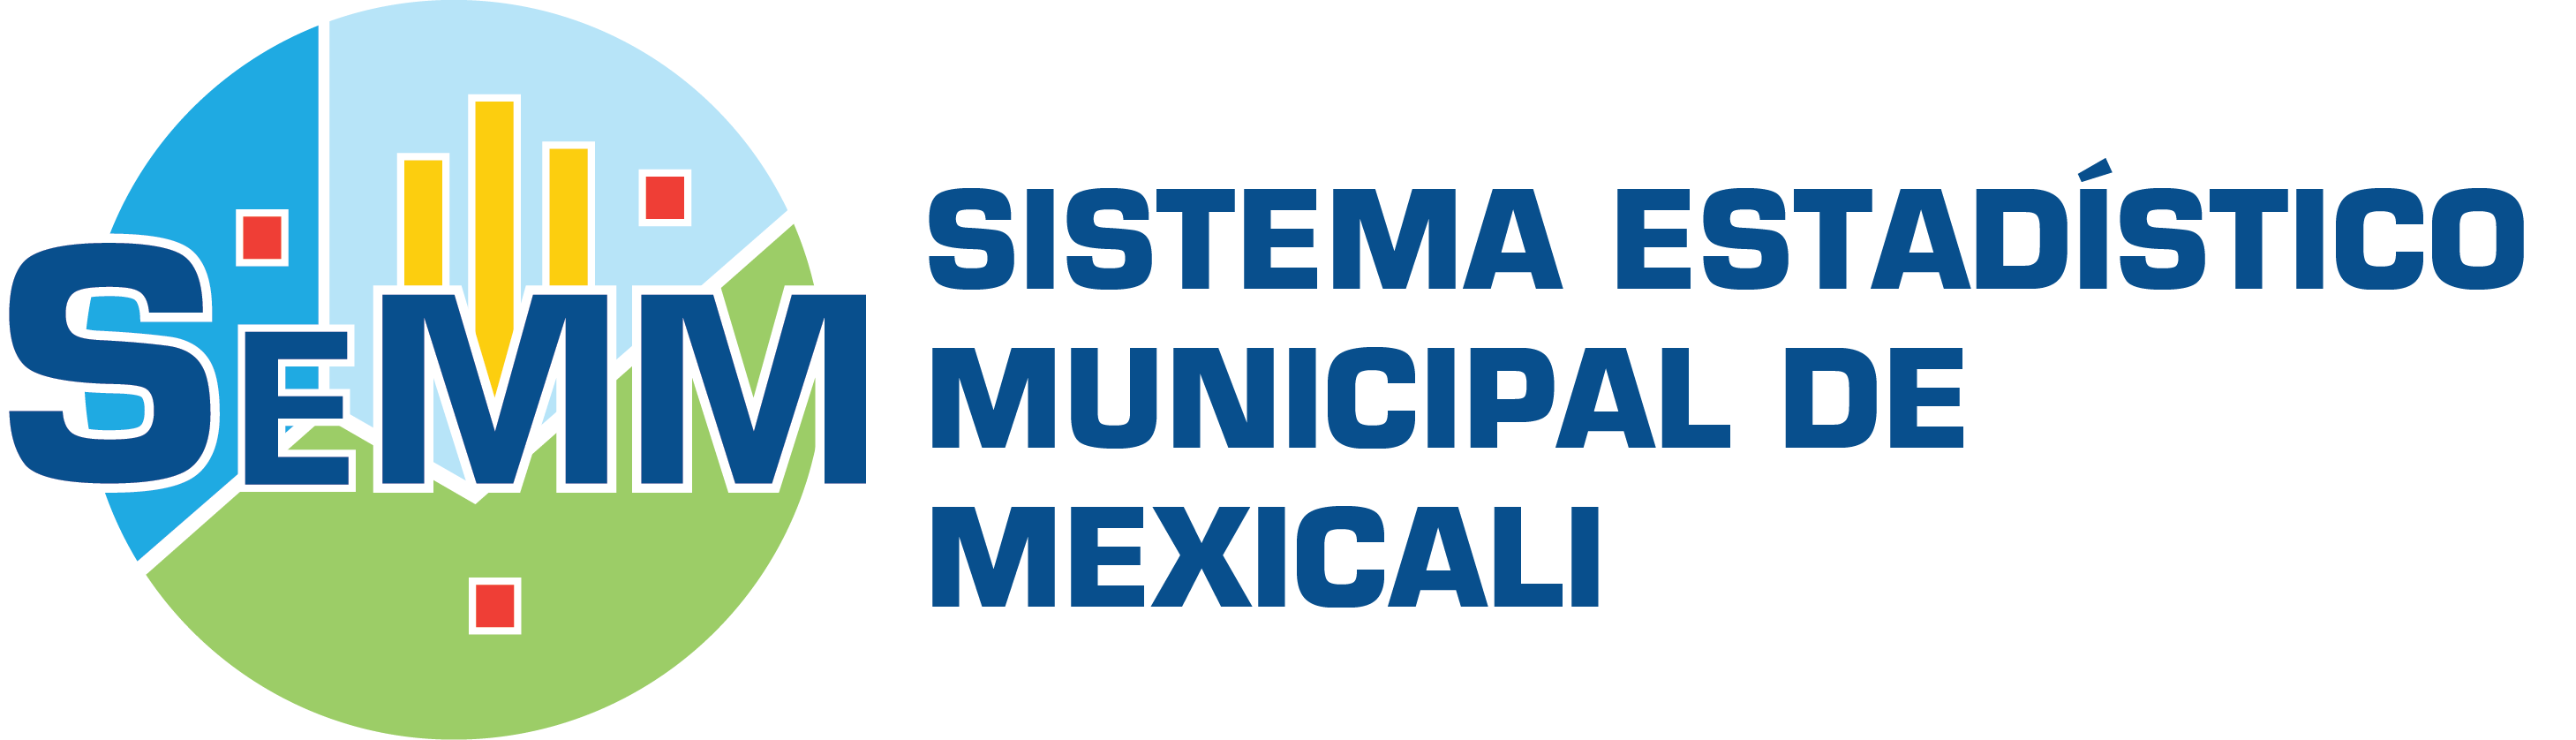 Sistema Estadístico Municipal de Mexicali